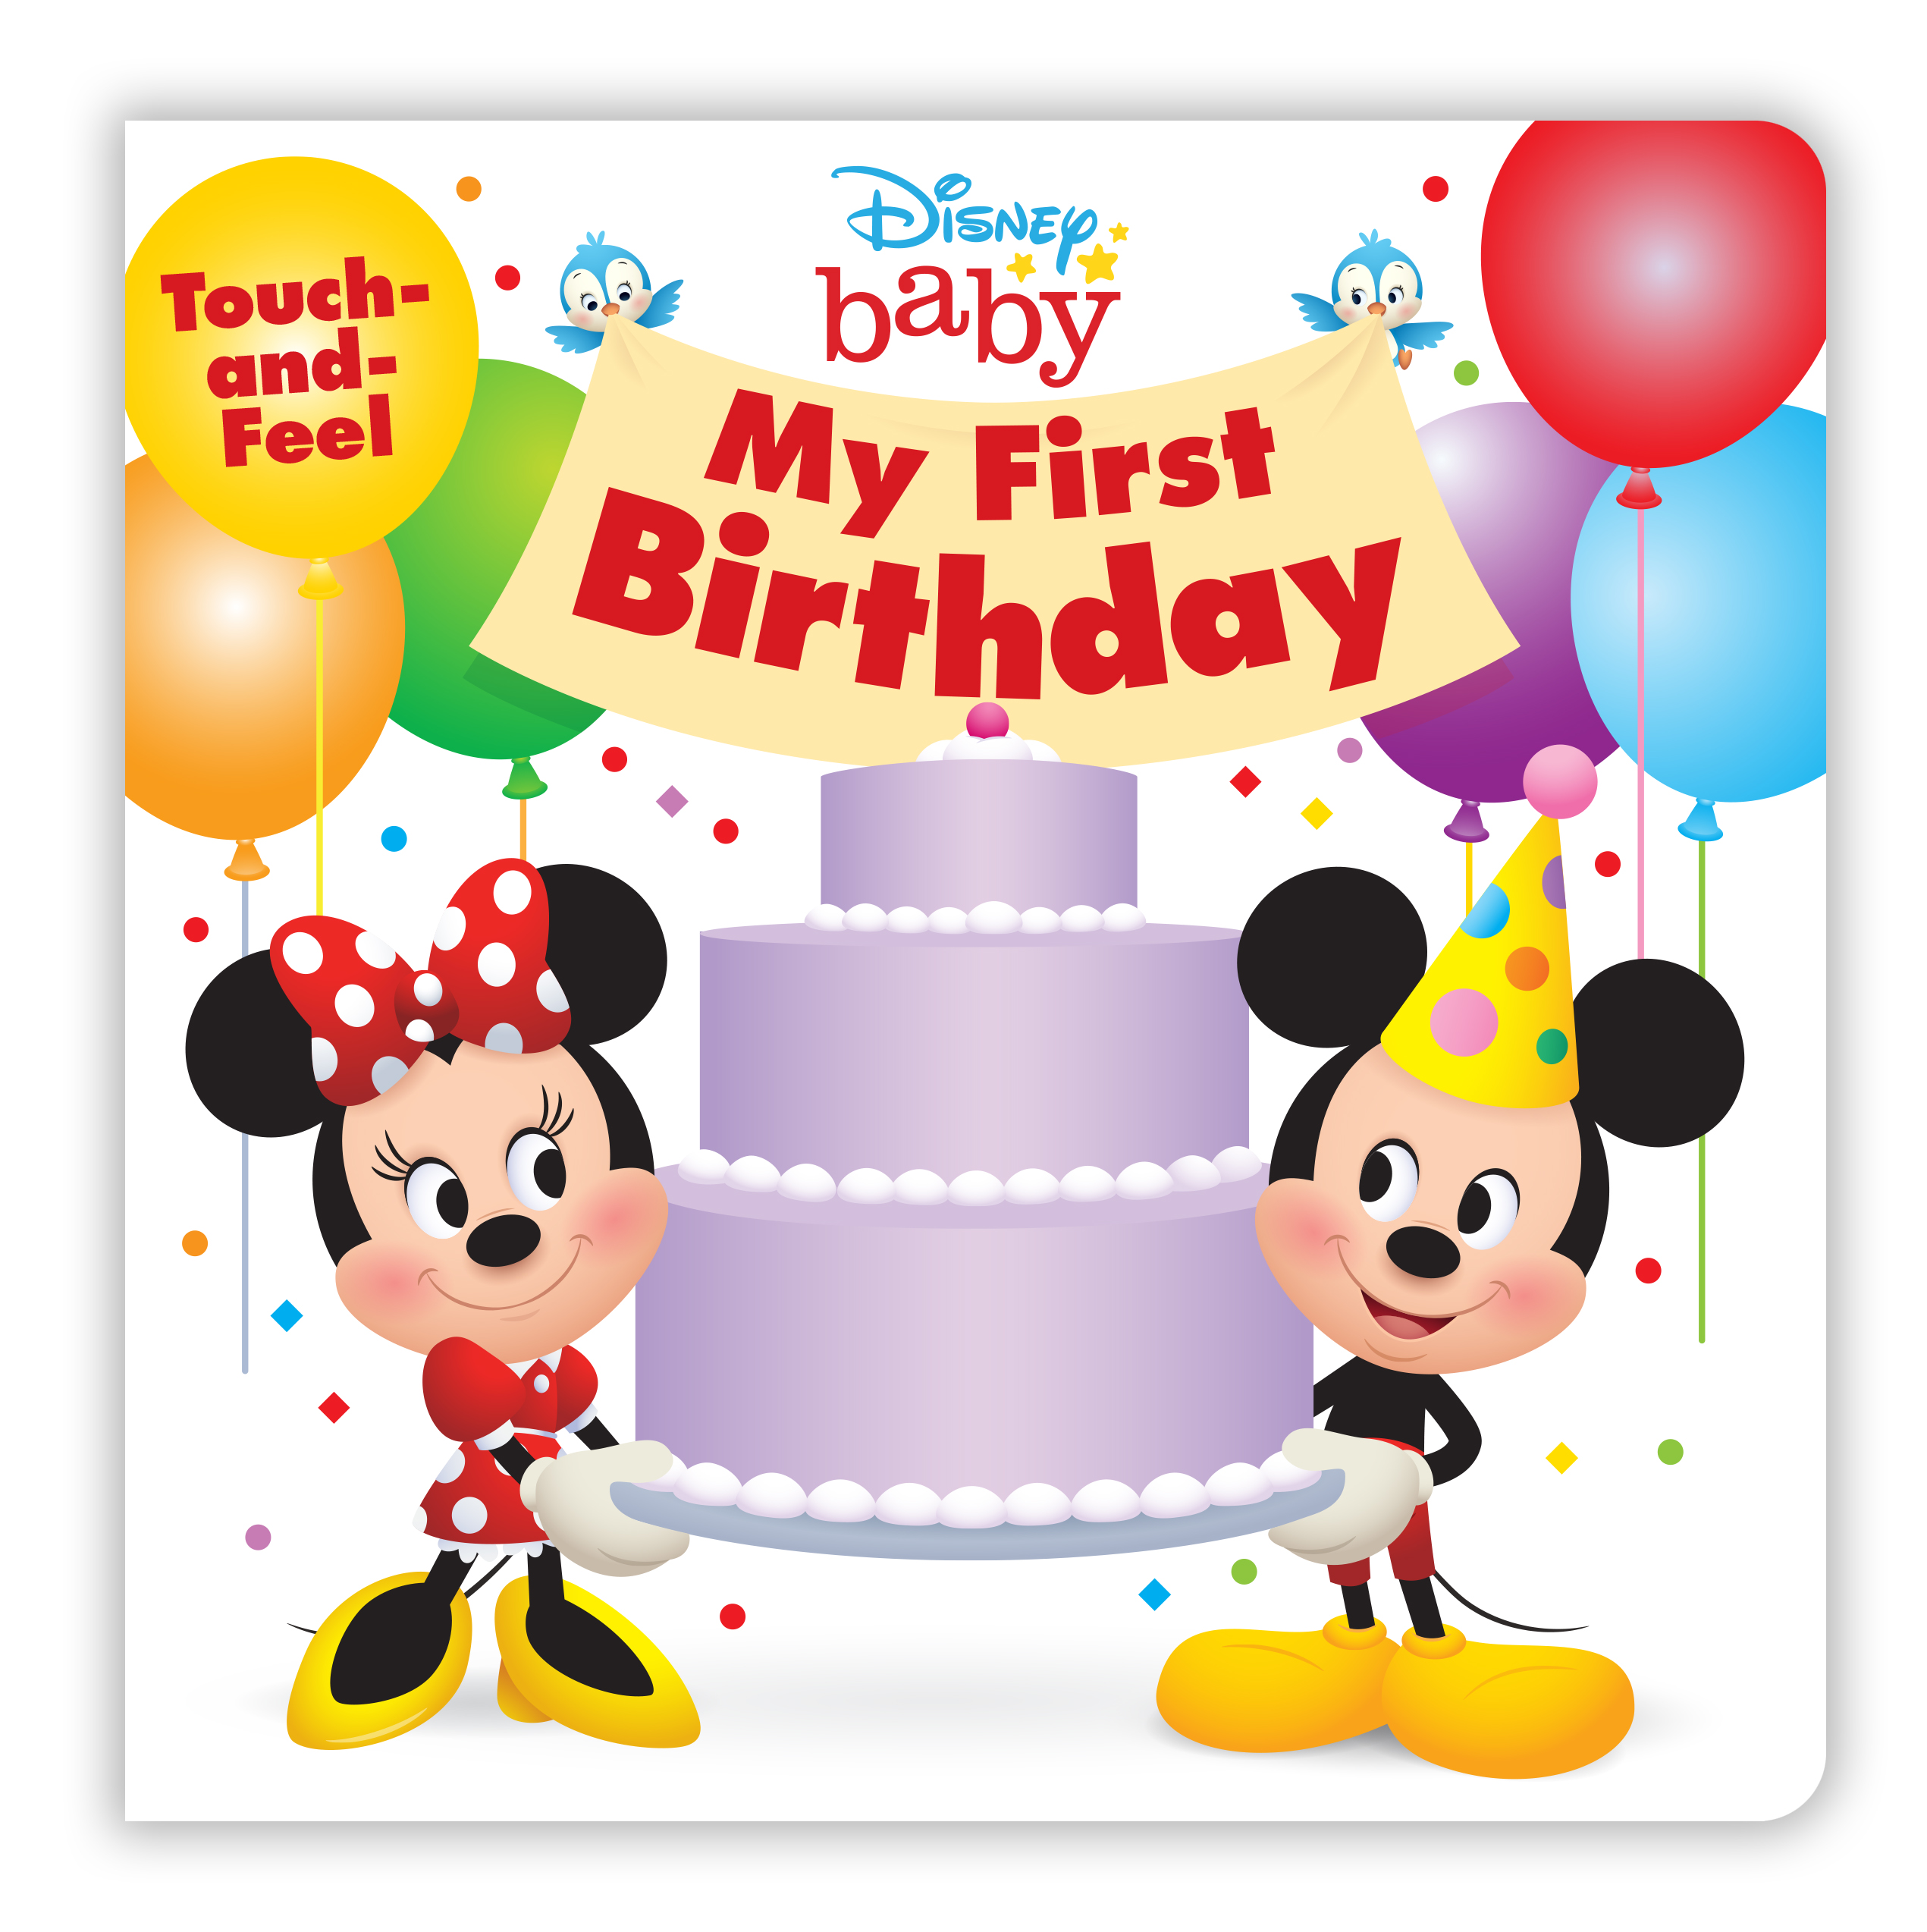 My First Birthday Disney Baby by Disney Book Group Disney Storybook Art  Team - Disney, Disney Baby Books